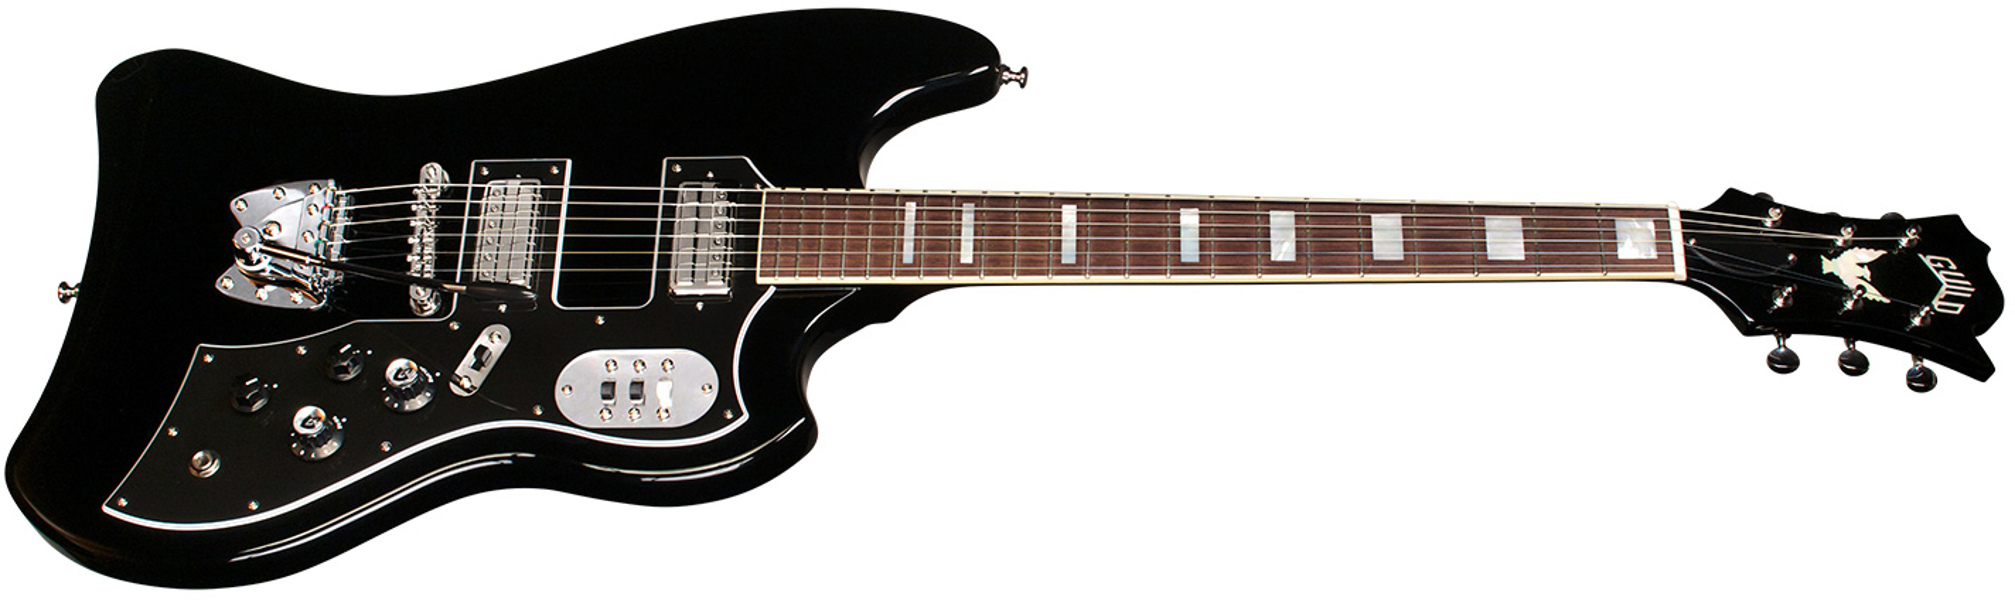 Guild S-200 T-bird - Noir - Retro rock electric guitar - Variation 2